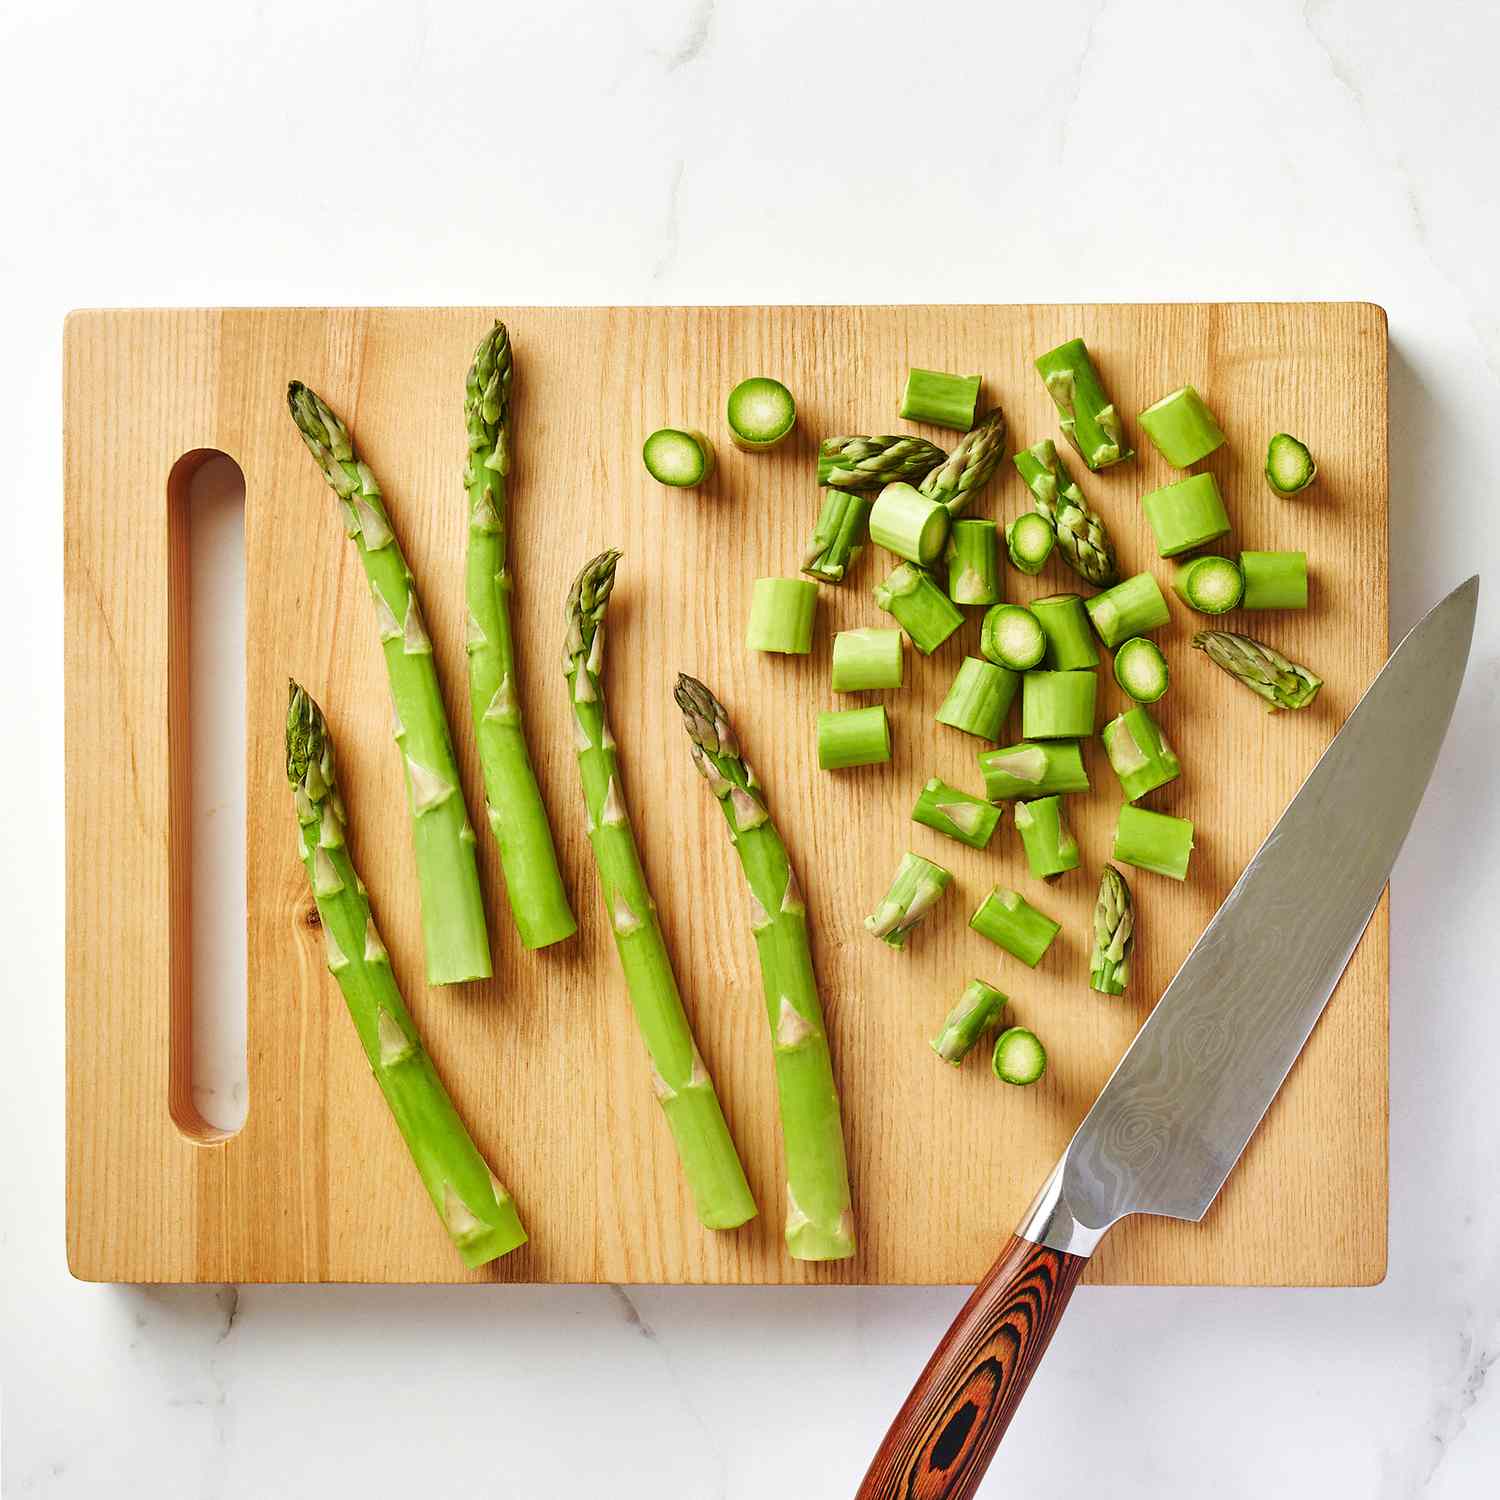 Asparagus and a knifee on a wood cutting board